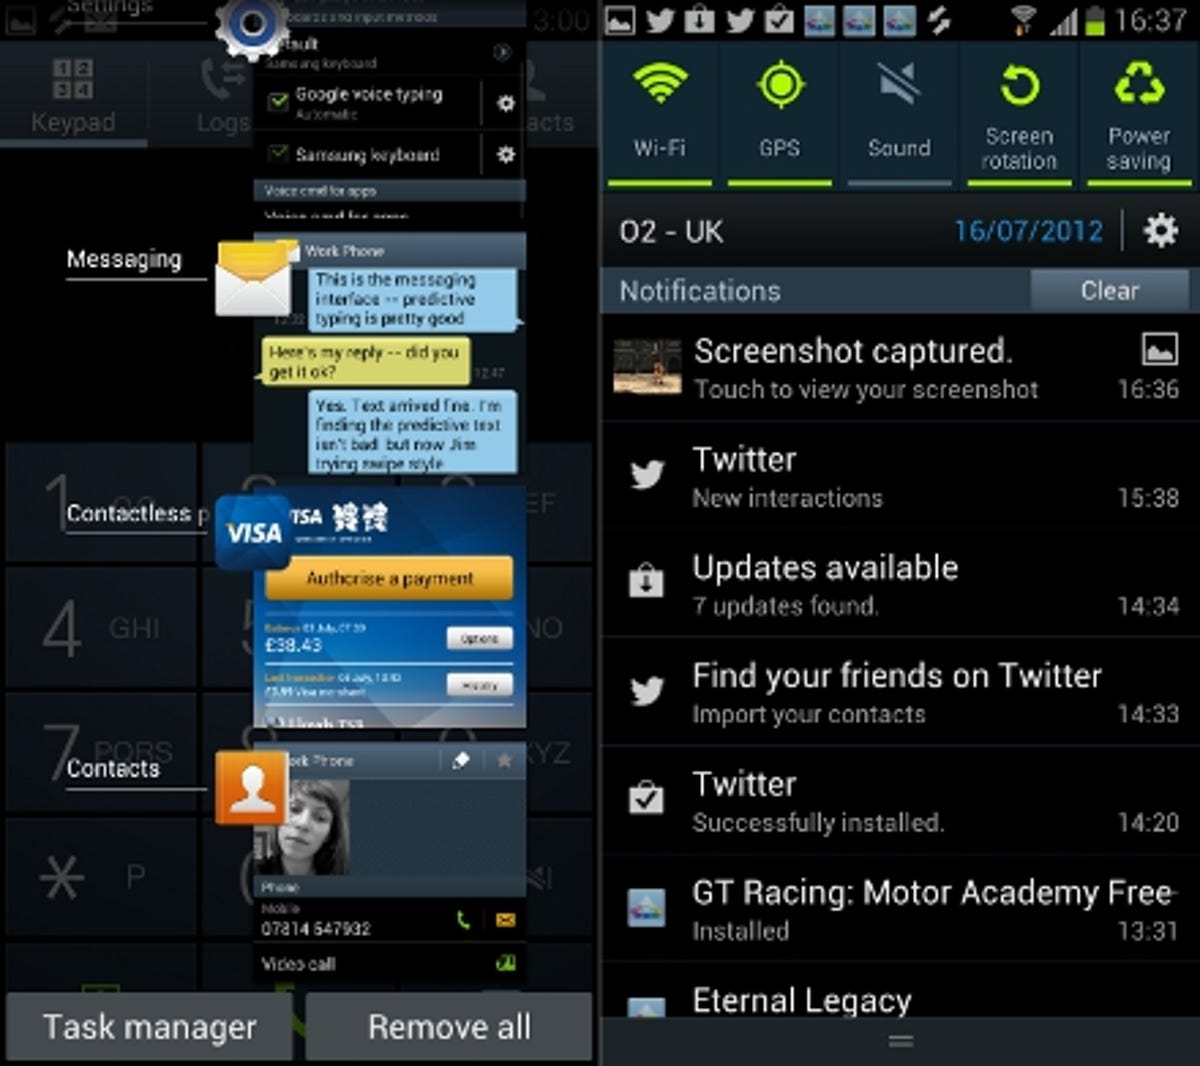 Samsung Galaxy S3 Recent Apps Notifications